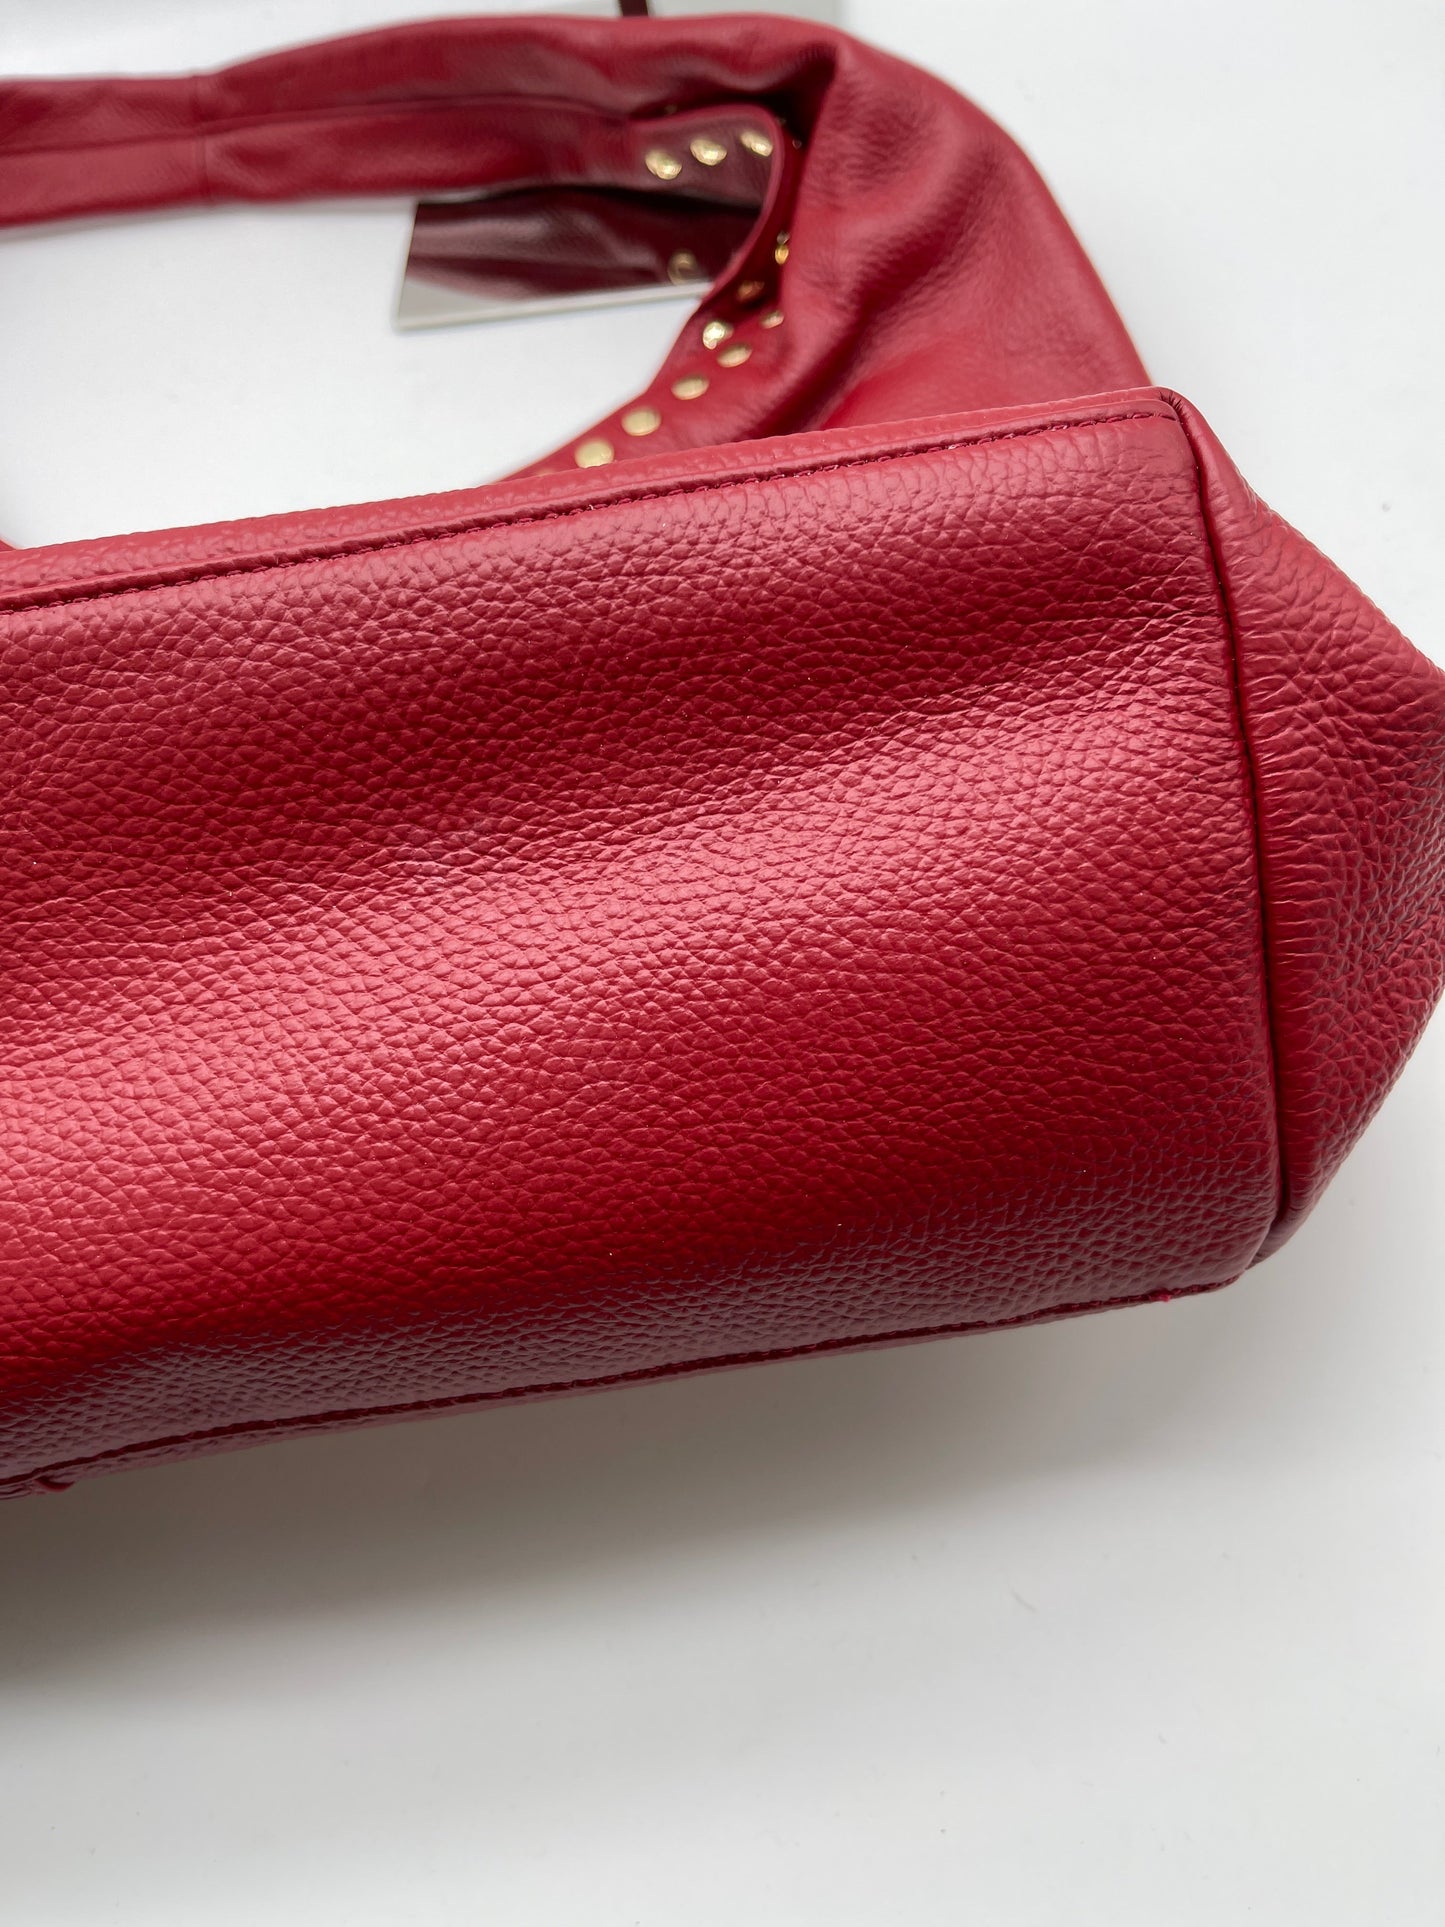 Handbag Designer By Clothes Mentor  Size: Medium